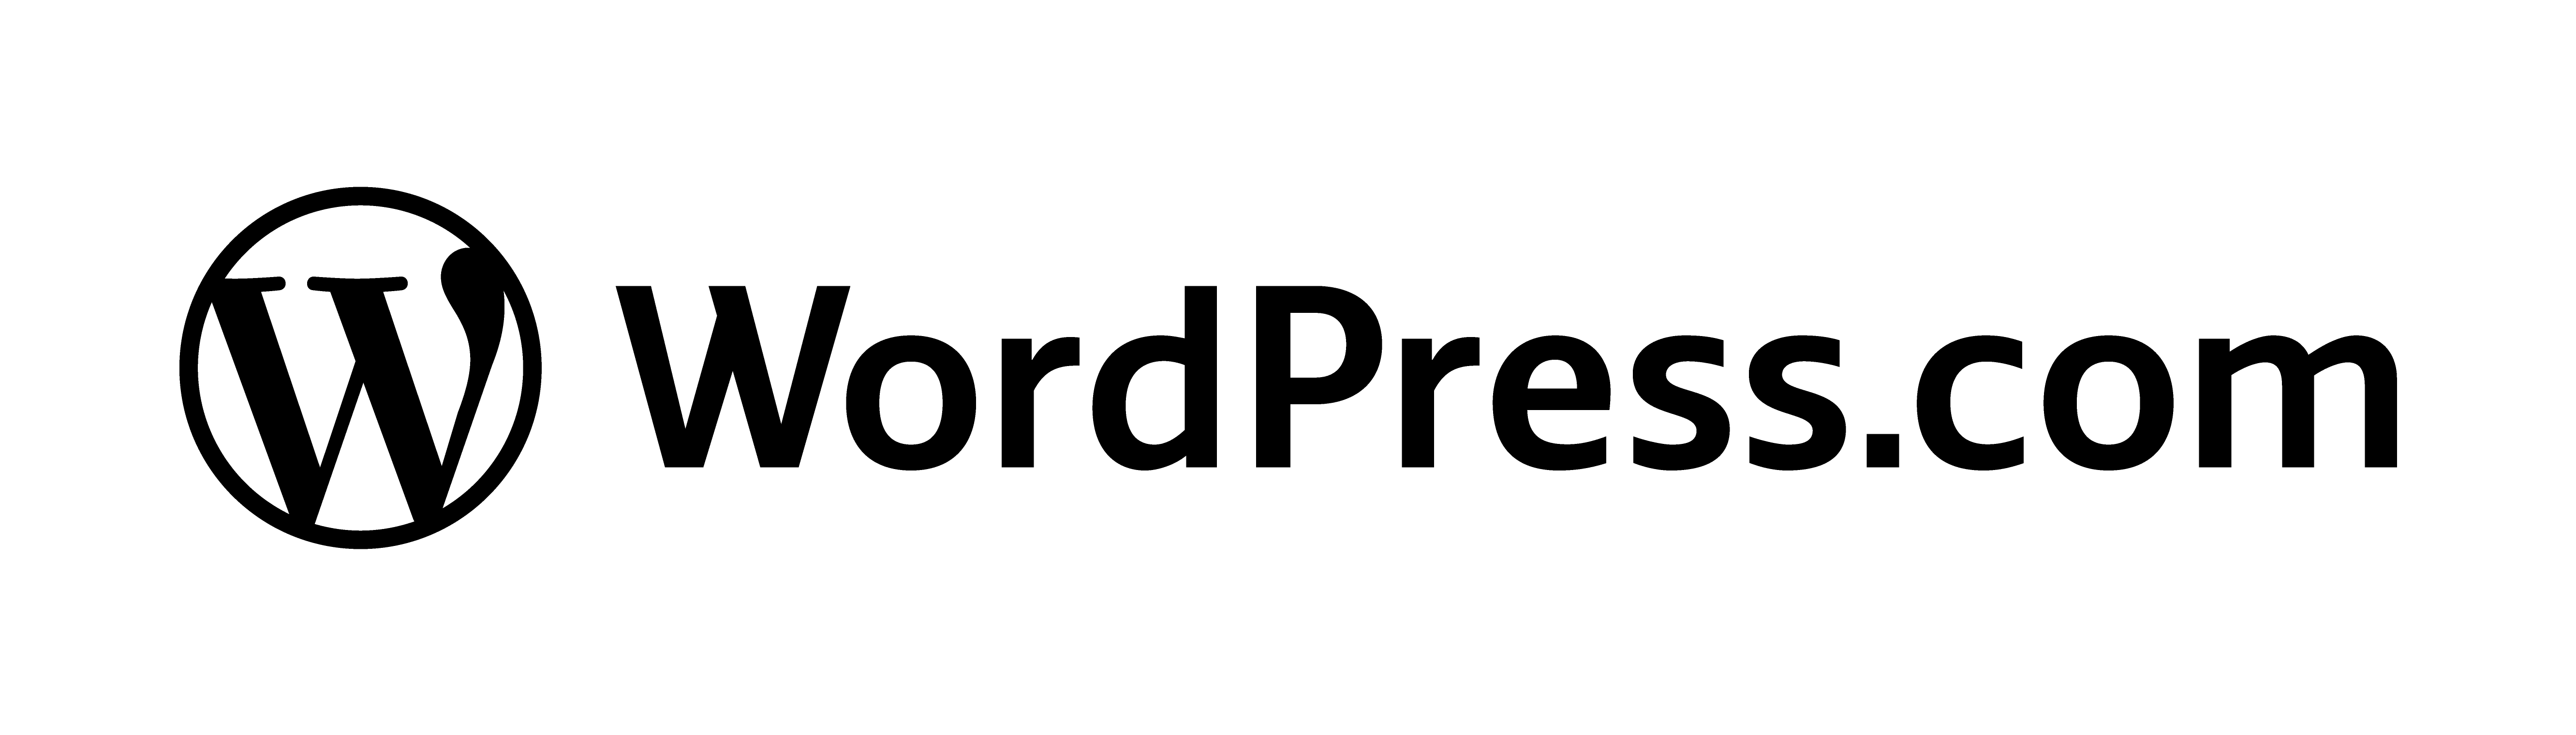 wordpress-logo-digital-giants